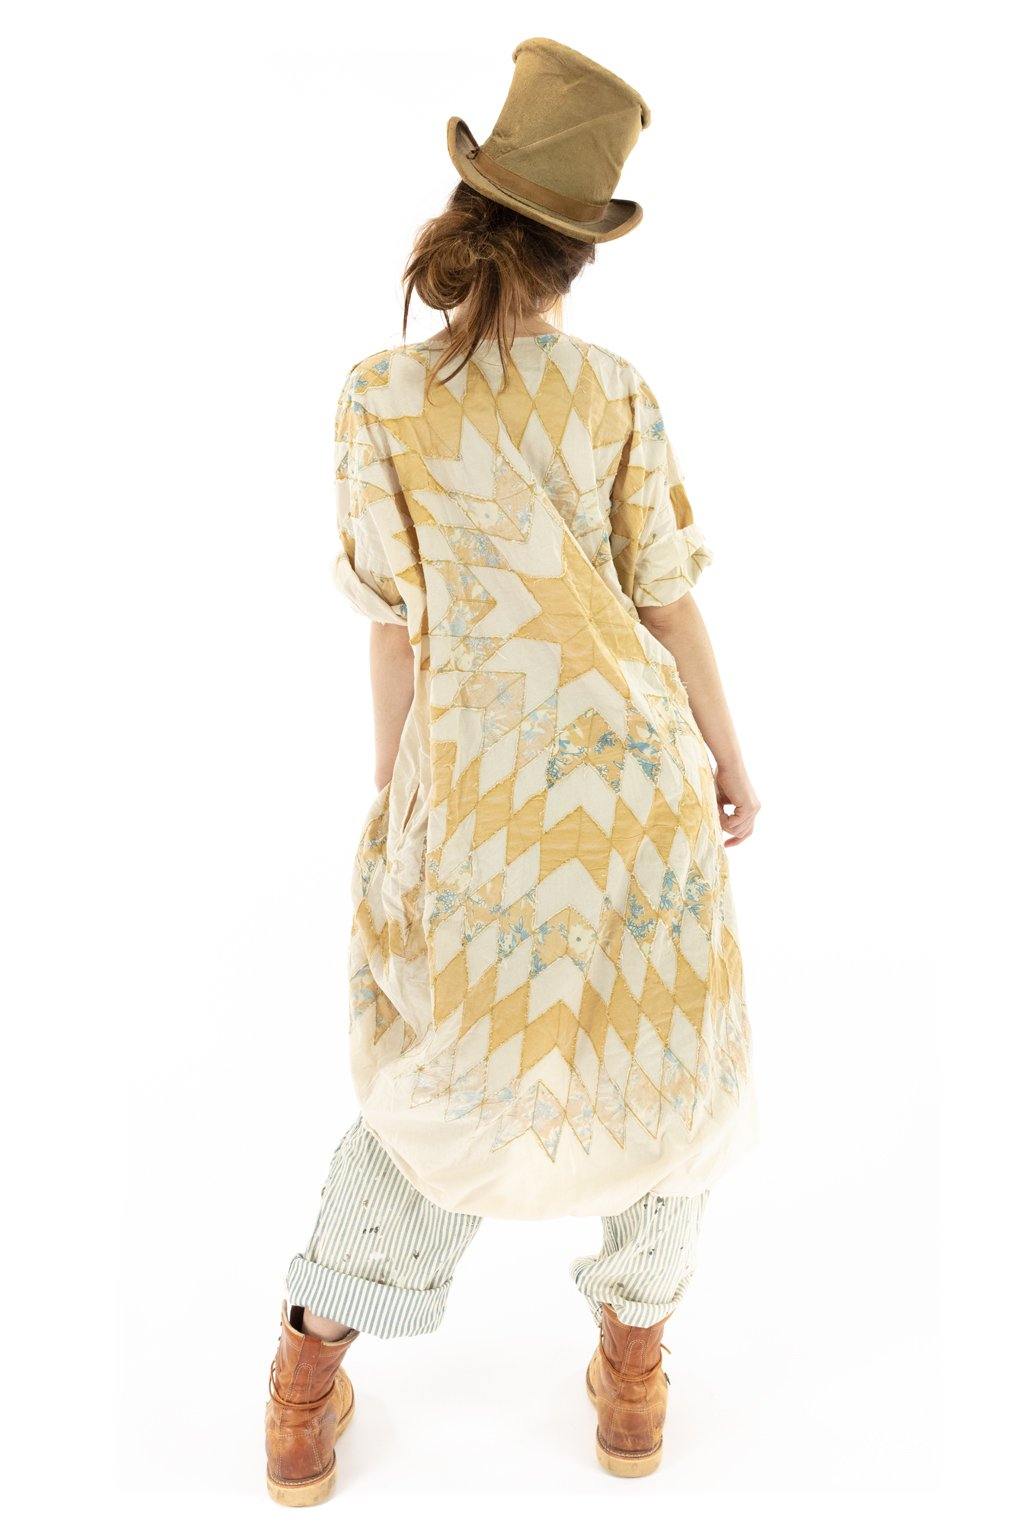 Quiltwork Artist Smock Dress - Magnolia Pearl Clothing